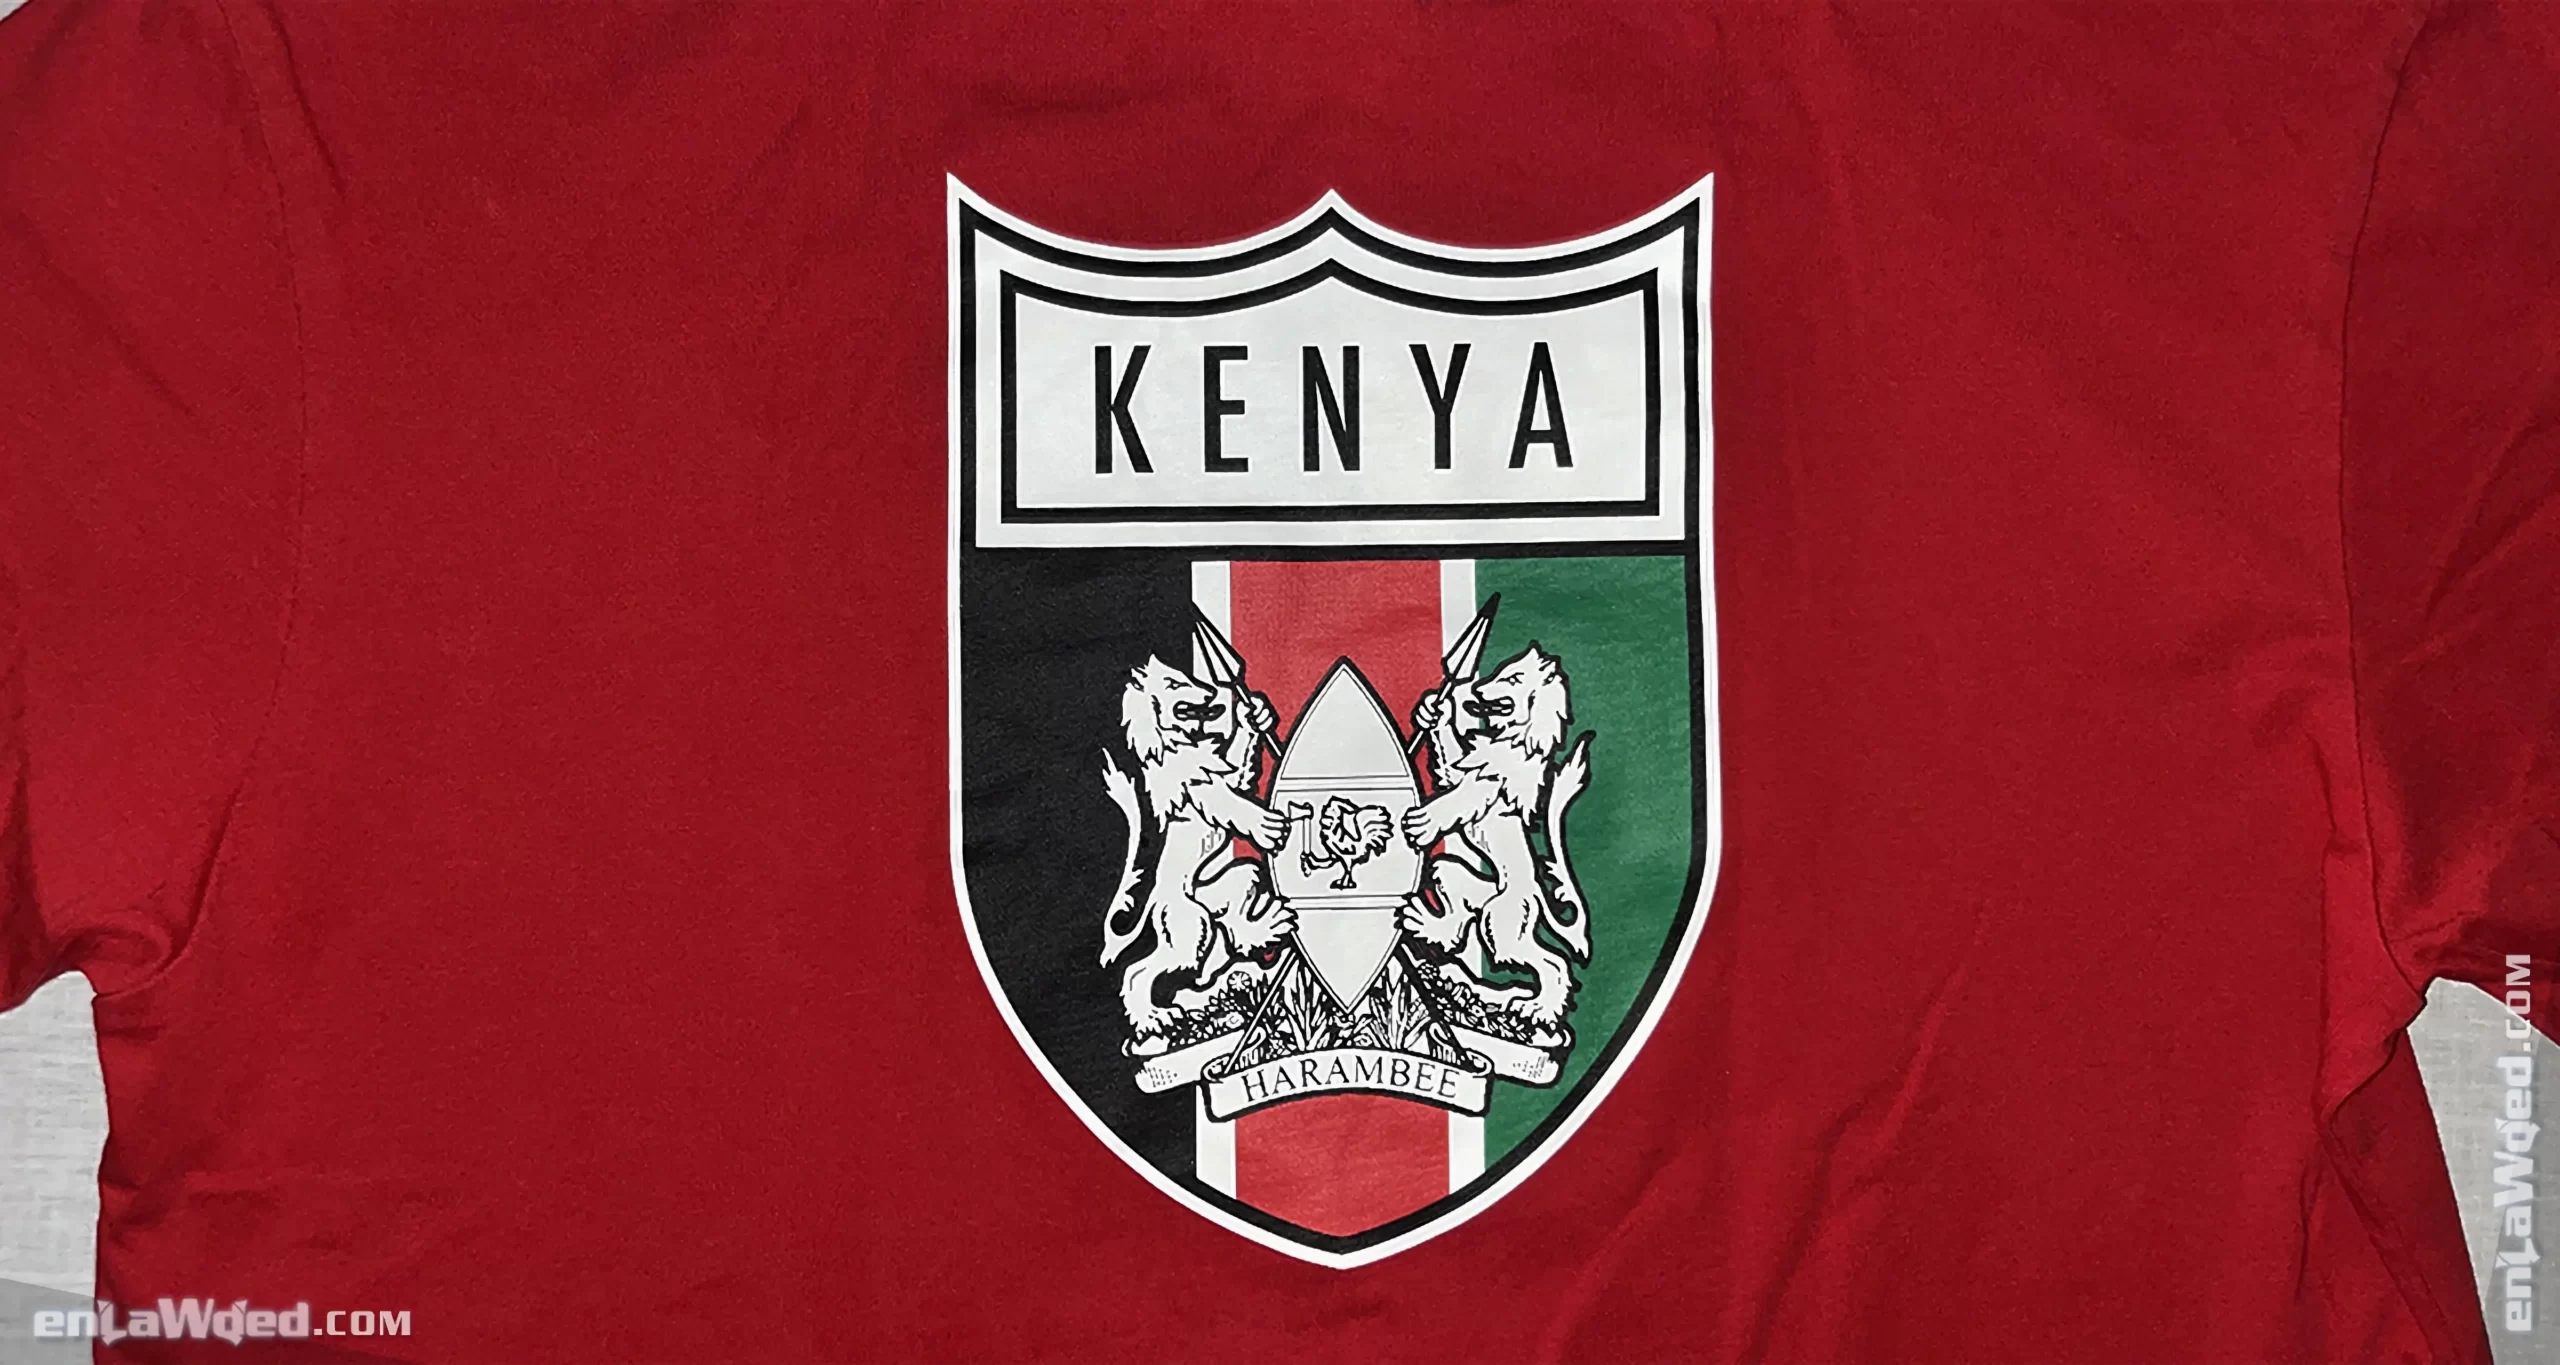 Men’s 2007 Kenya Harambee T-Shirt by Adidas Originals: Overnight (EnLawded.com file #lp1nb7k4126193786862uo86g)